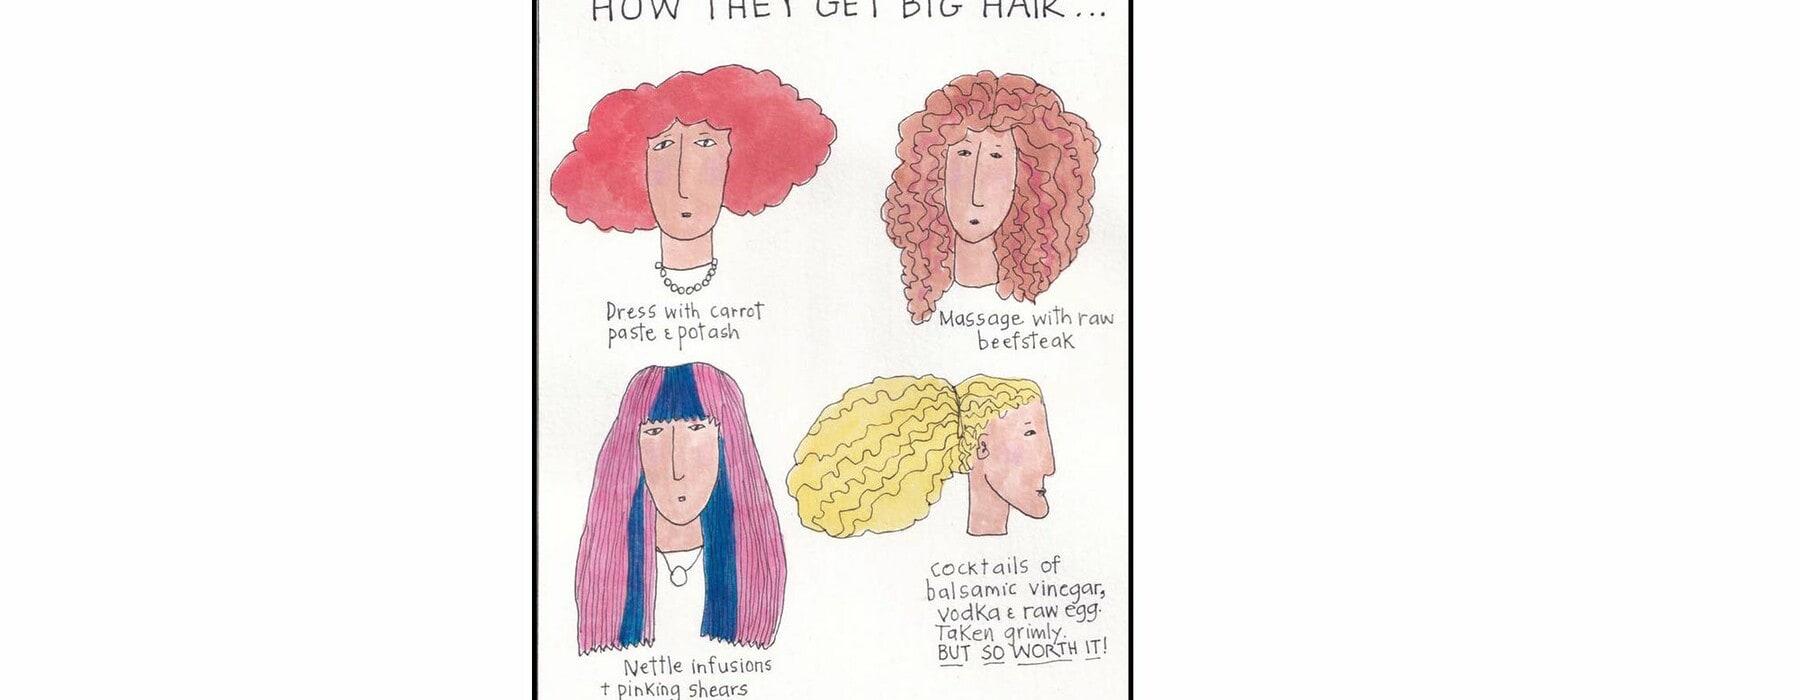 Illustration of various hair styles